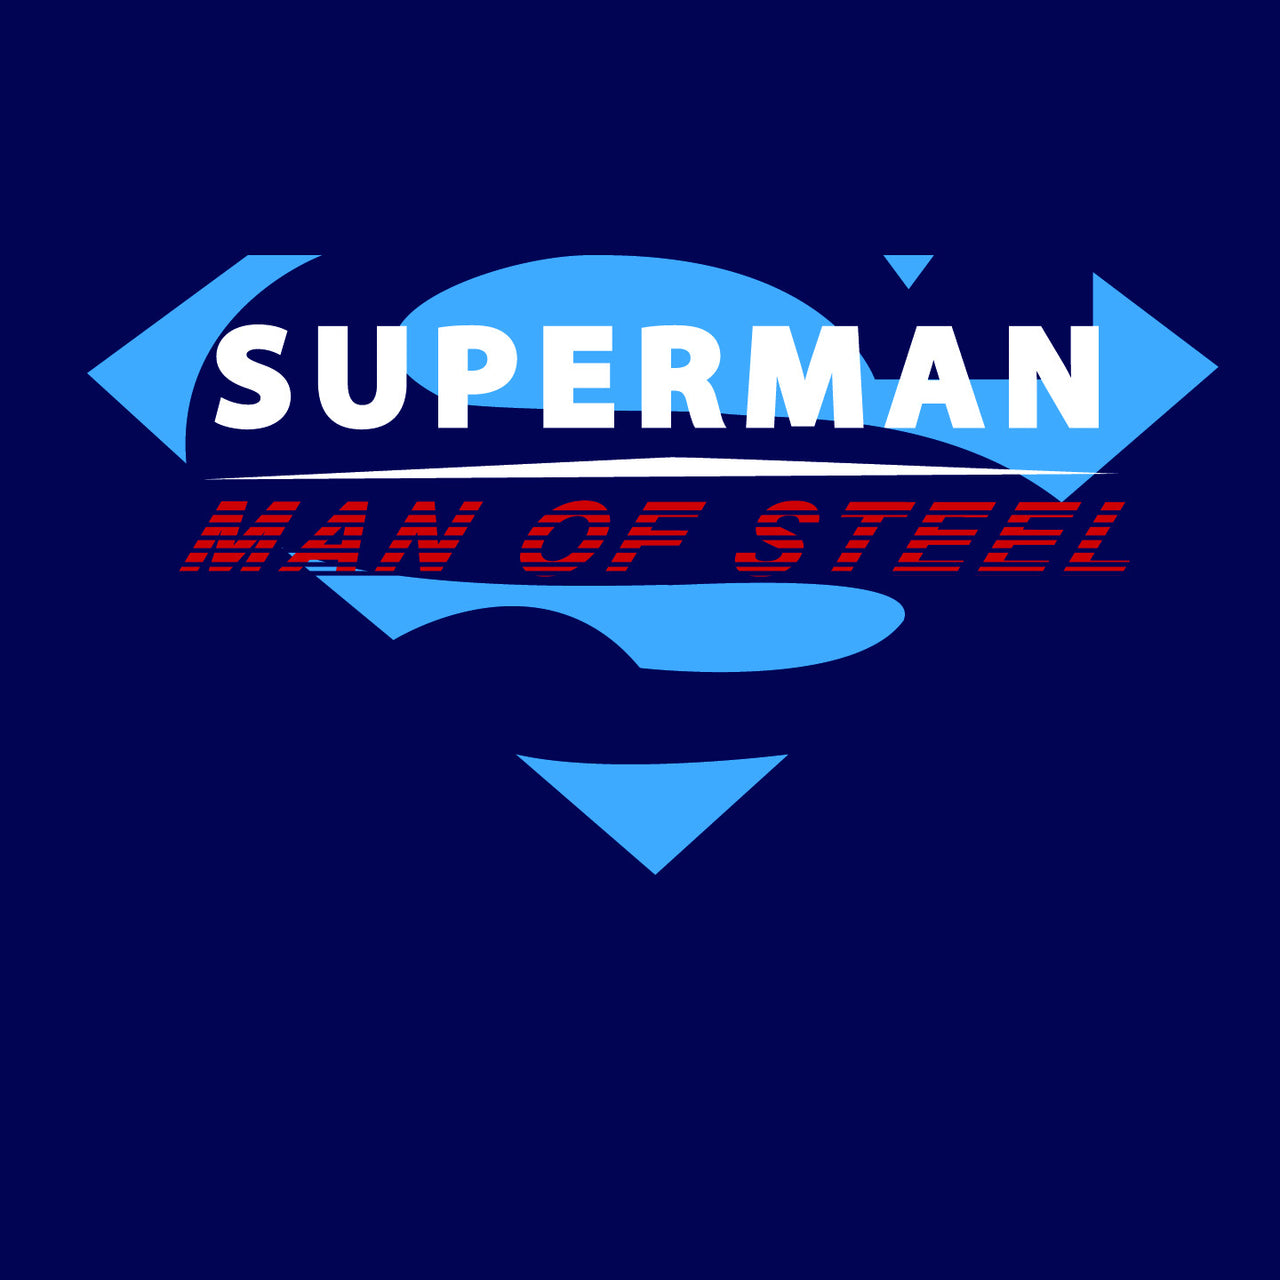 Superman Man of Steel Logo on Navy Colored tshirt for Men - TshirtNow.net - 2